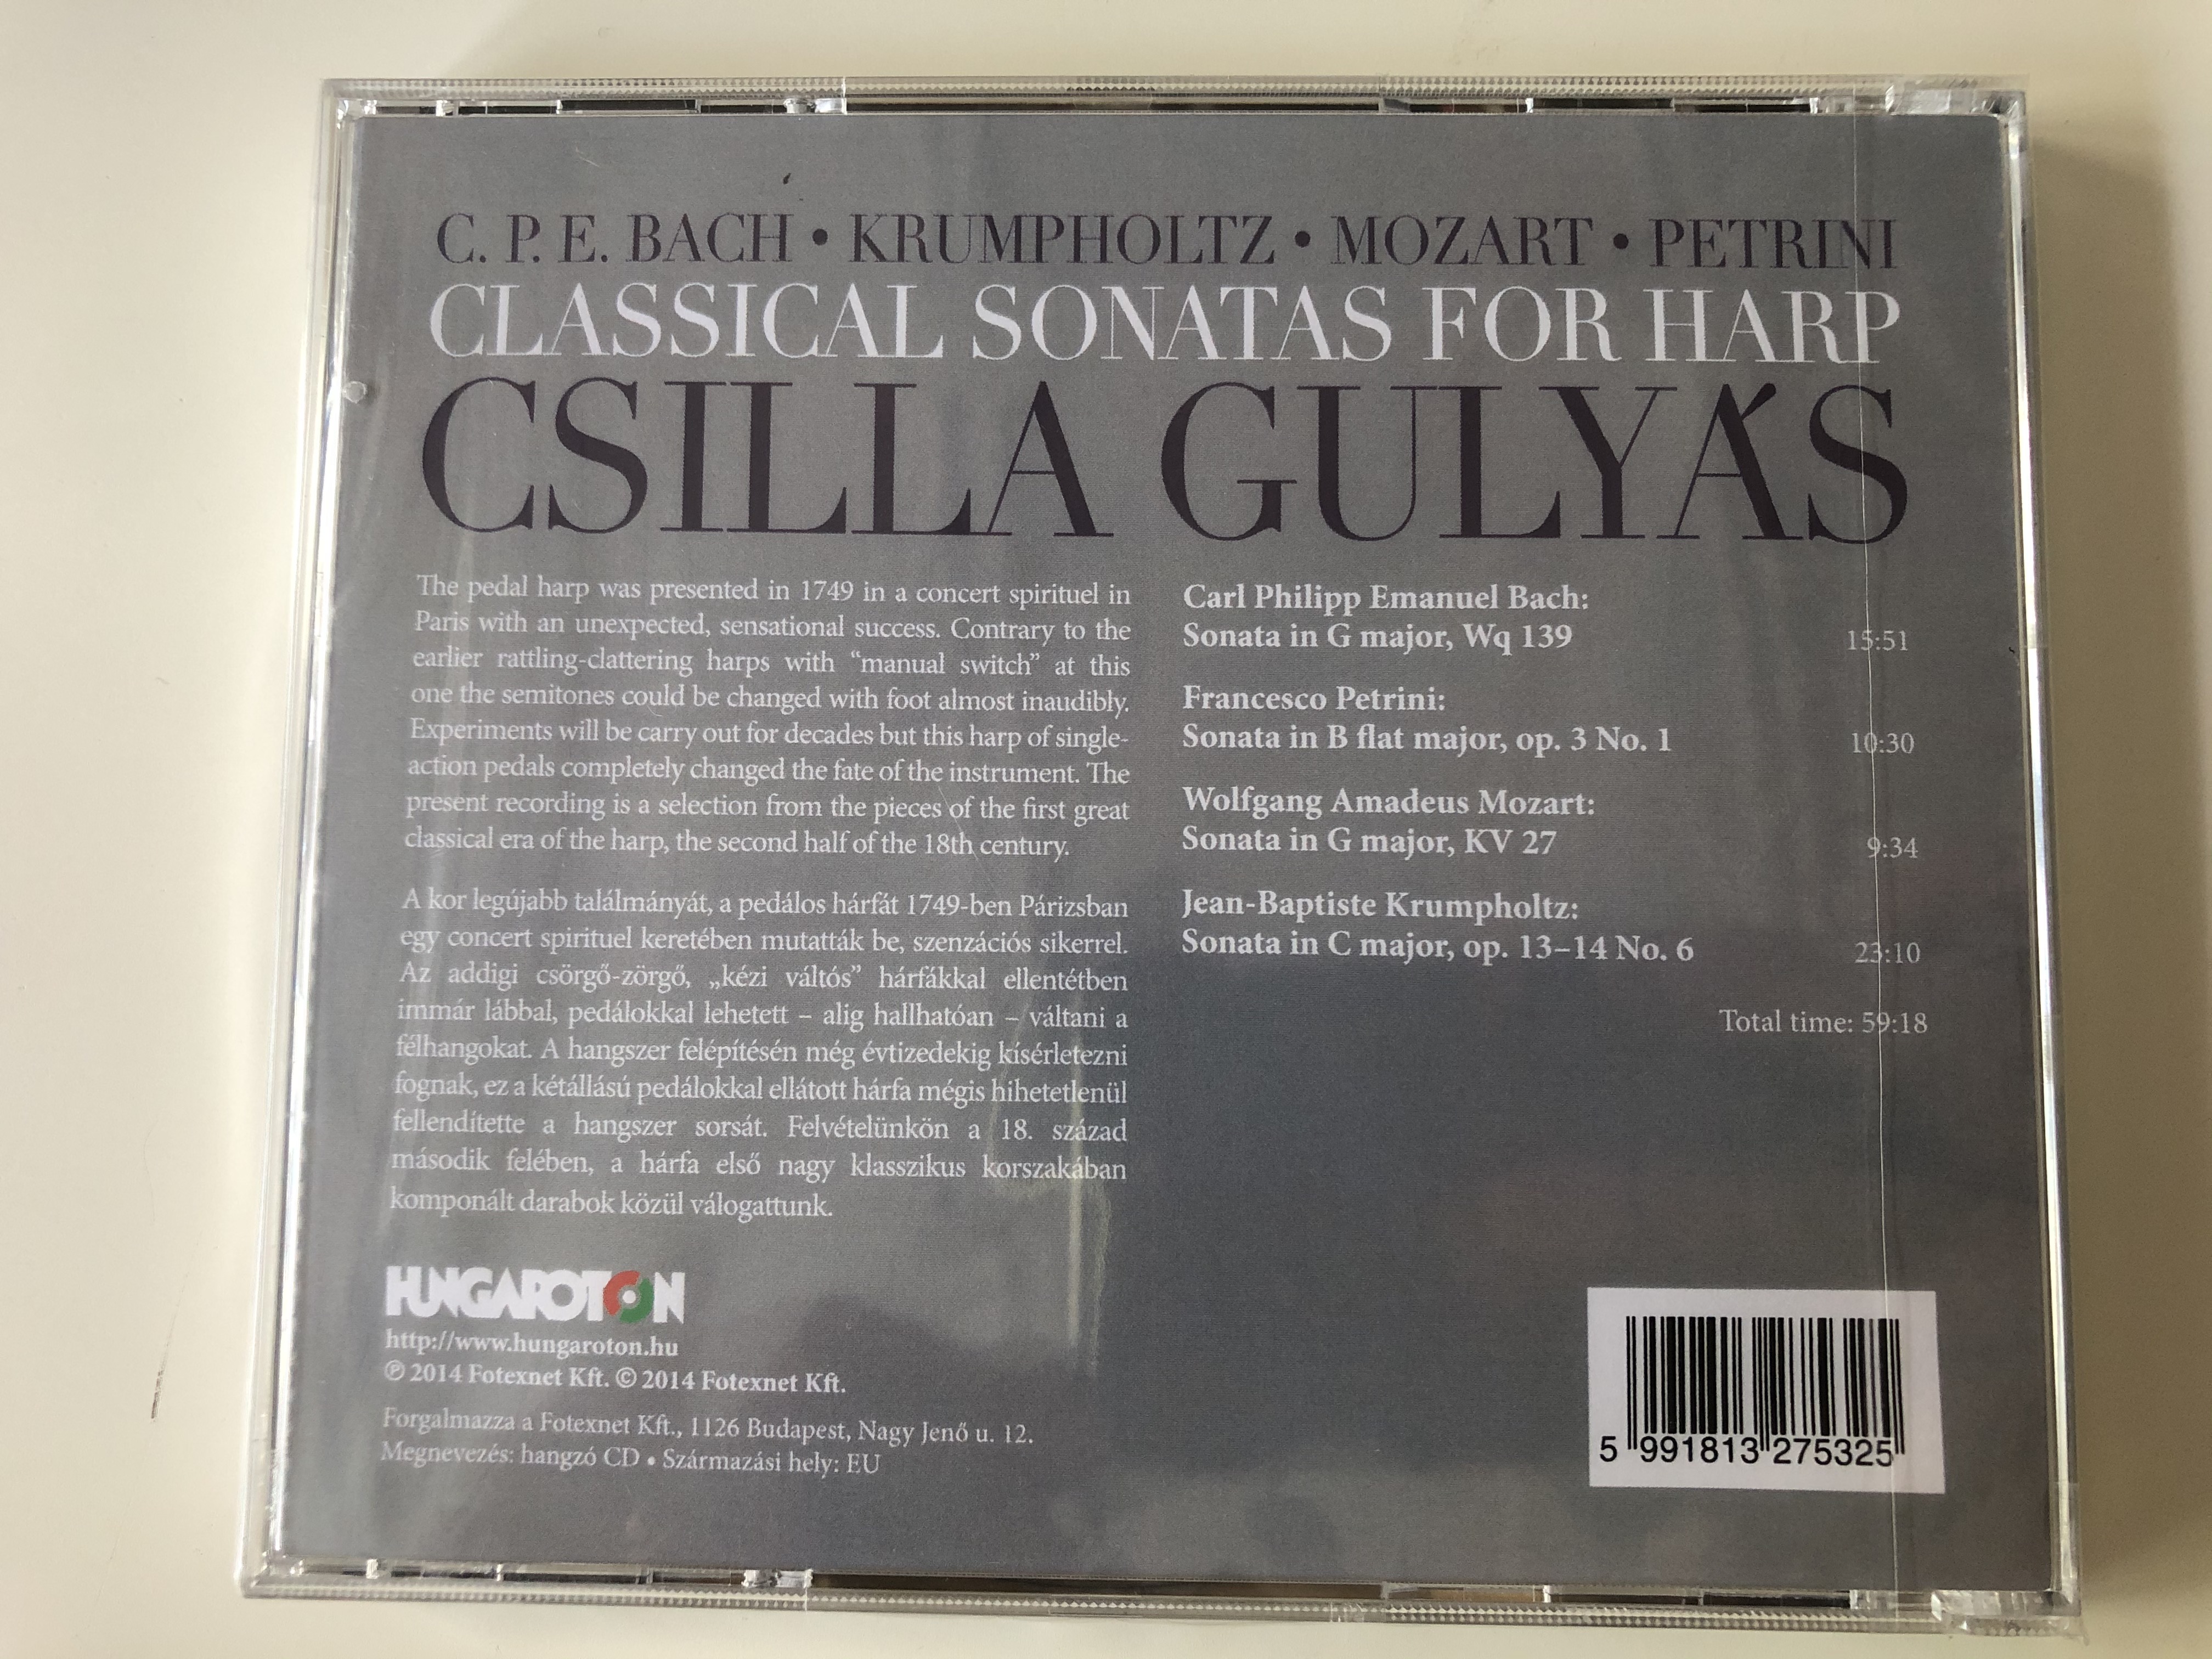 c.-p.-e.-bach-mozart-krumpholtz-petrini-classical-sonatas-for-harp-csilla-gulyas-hungaroton-audio-cd-2014-5991813275325-2-.jpg